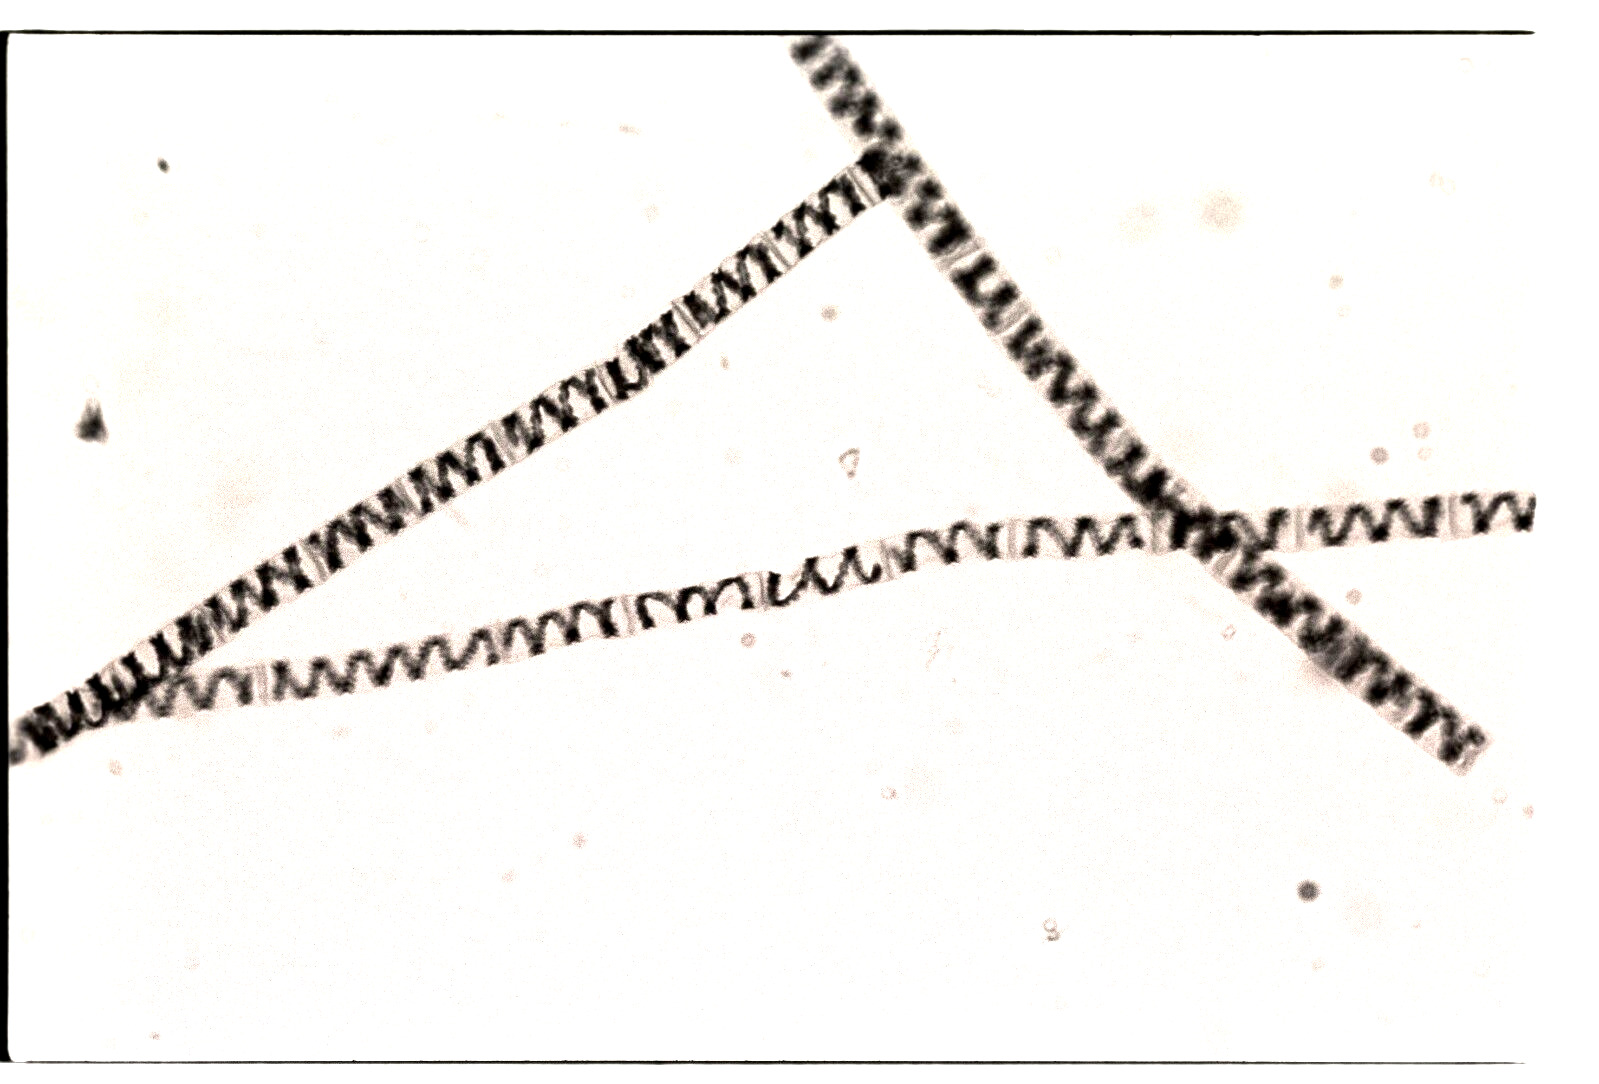 Spirogyra Micrograph Original 35 mm B&W Negative